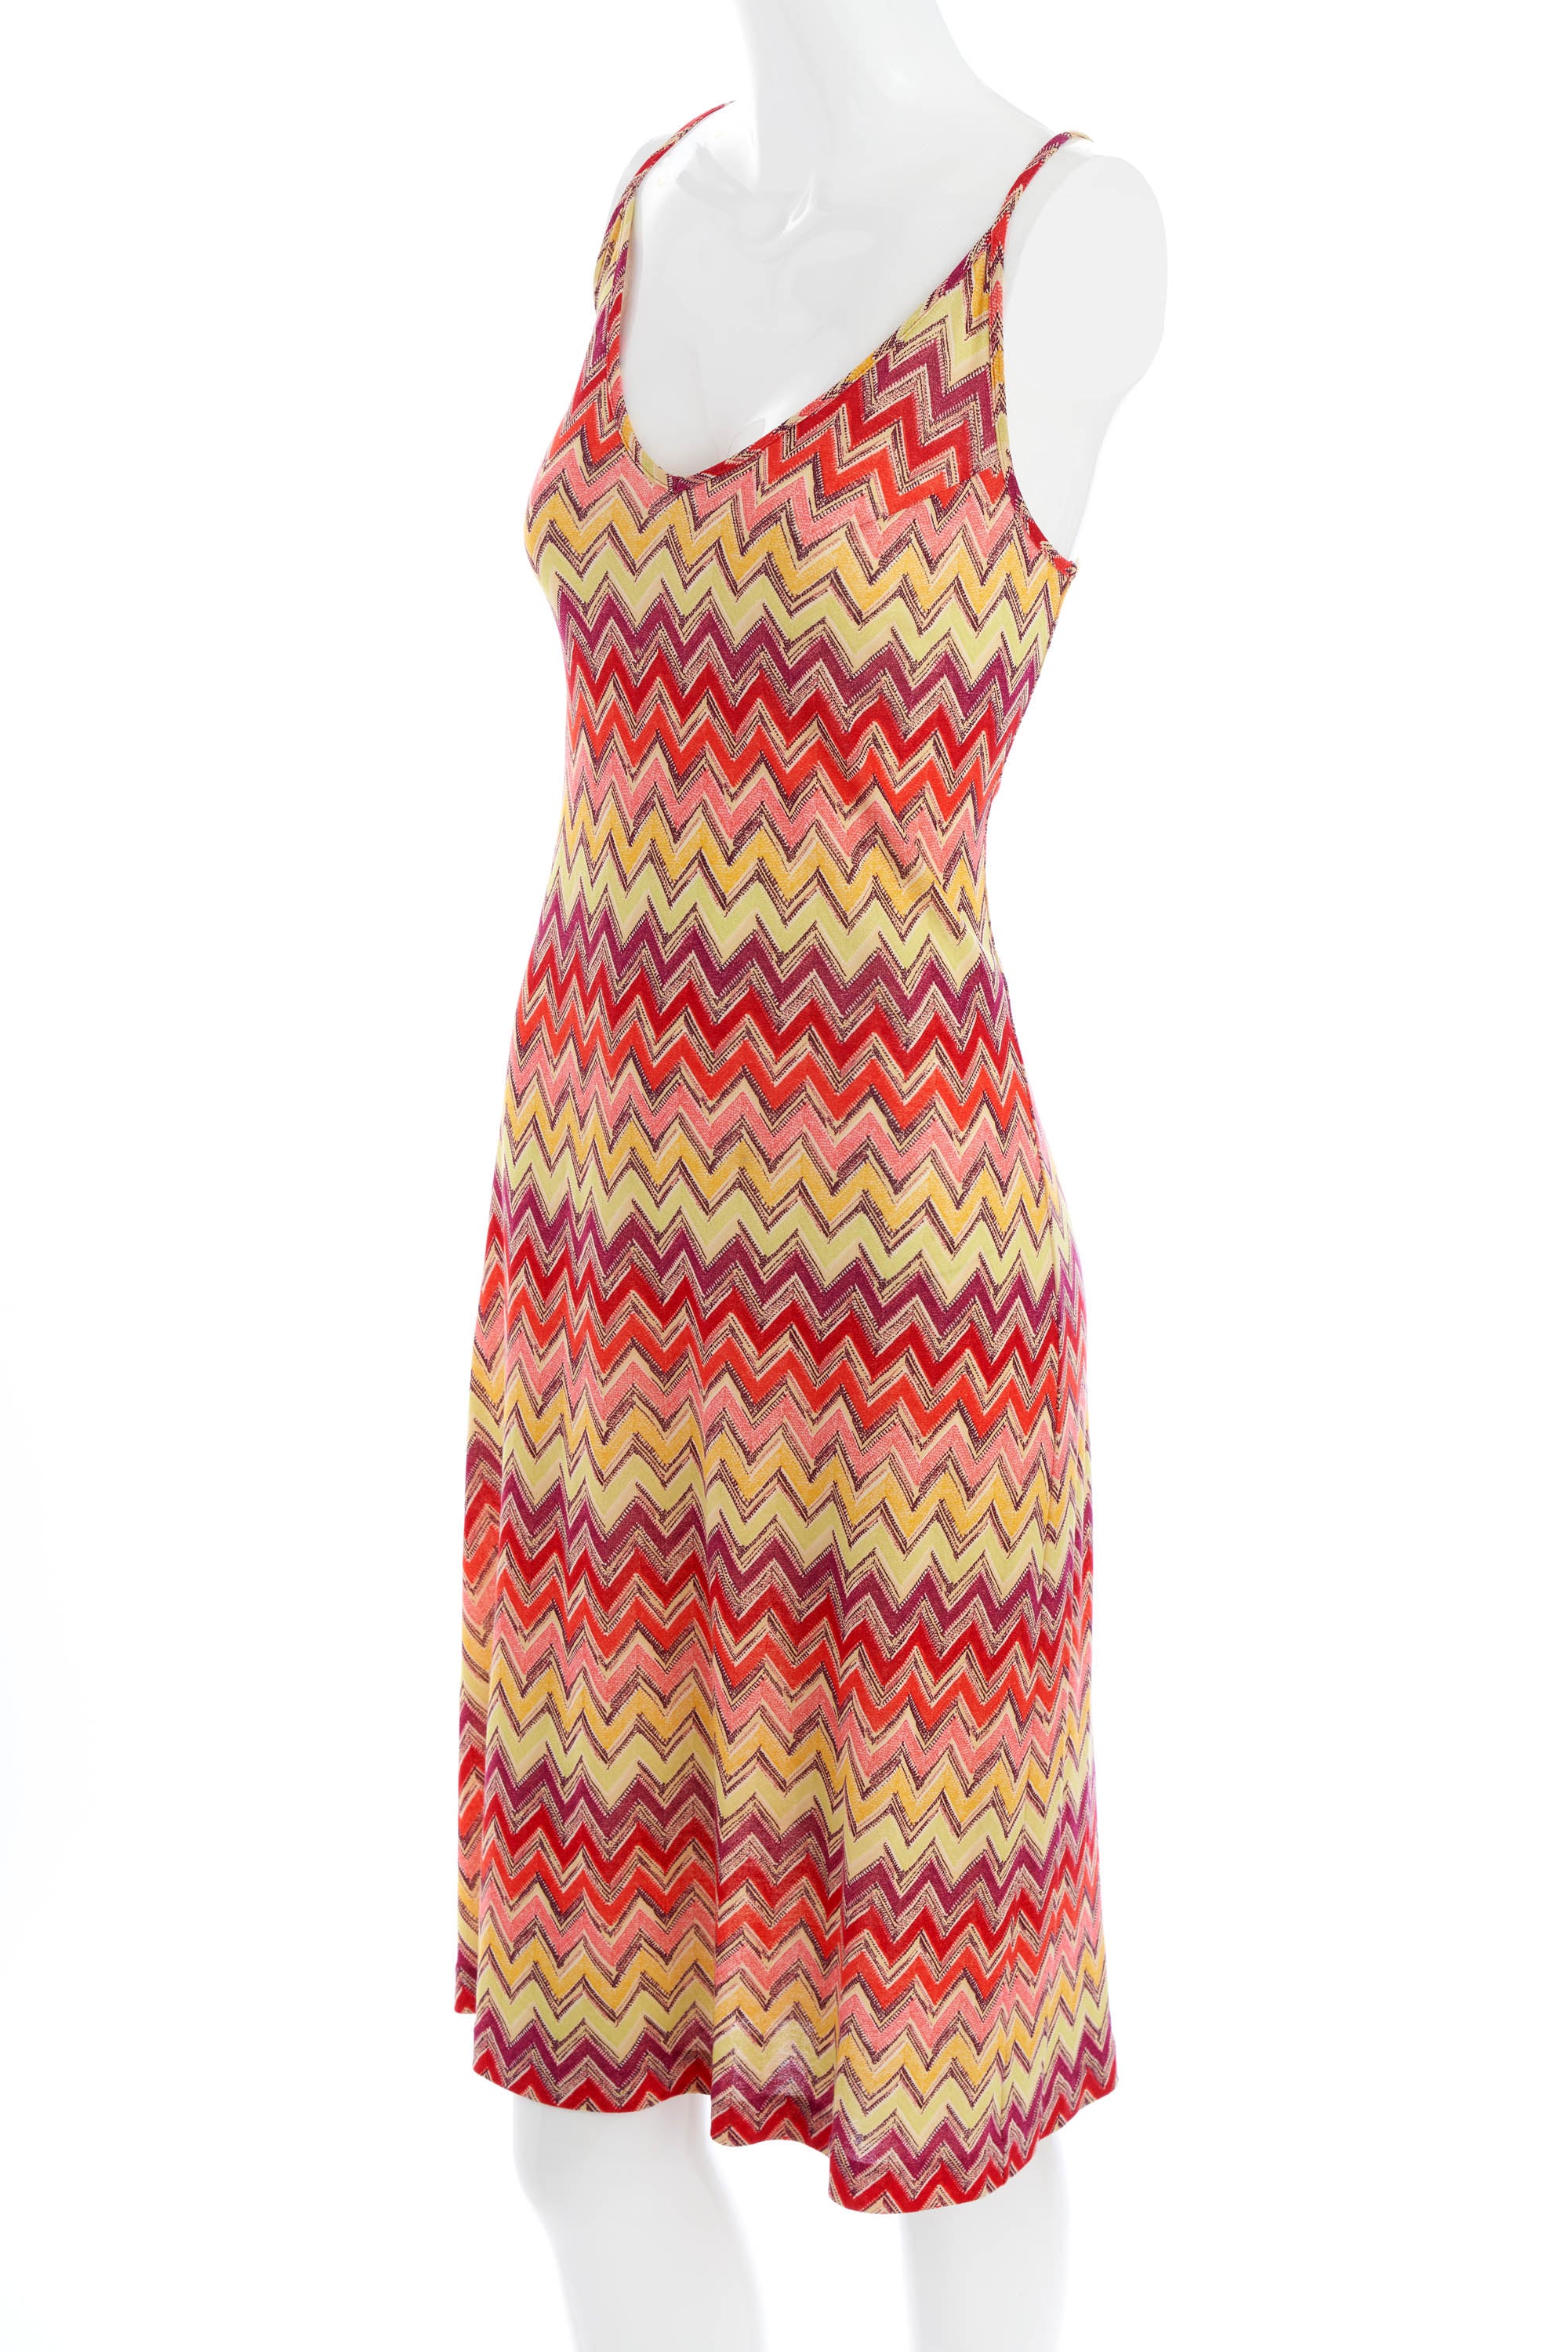 Missoni Herringbone Multicolor Sleeveless Dress Size 44